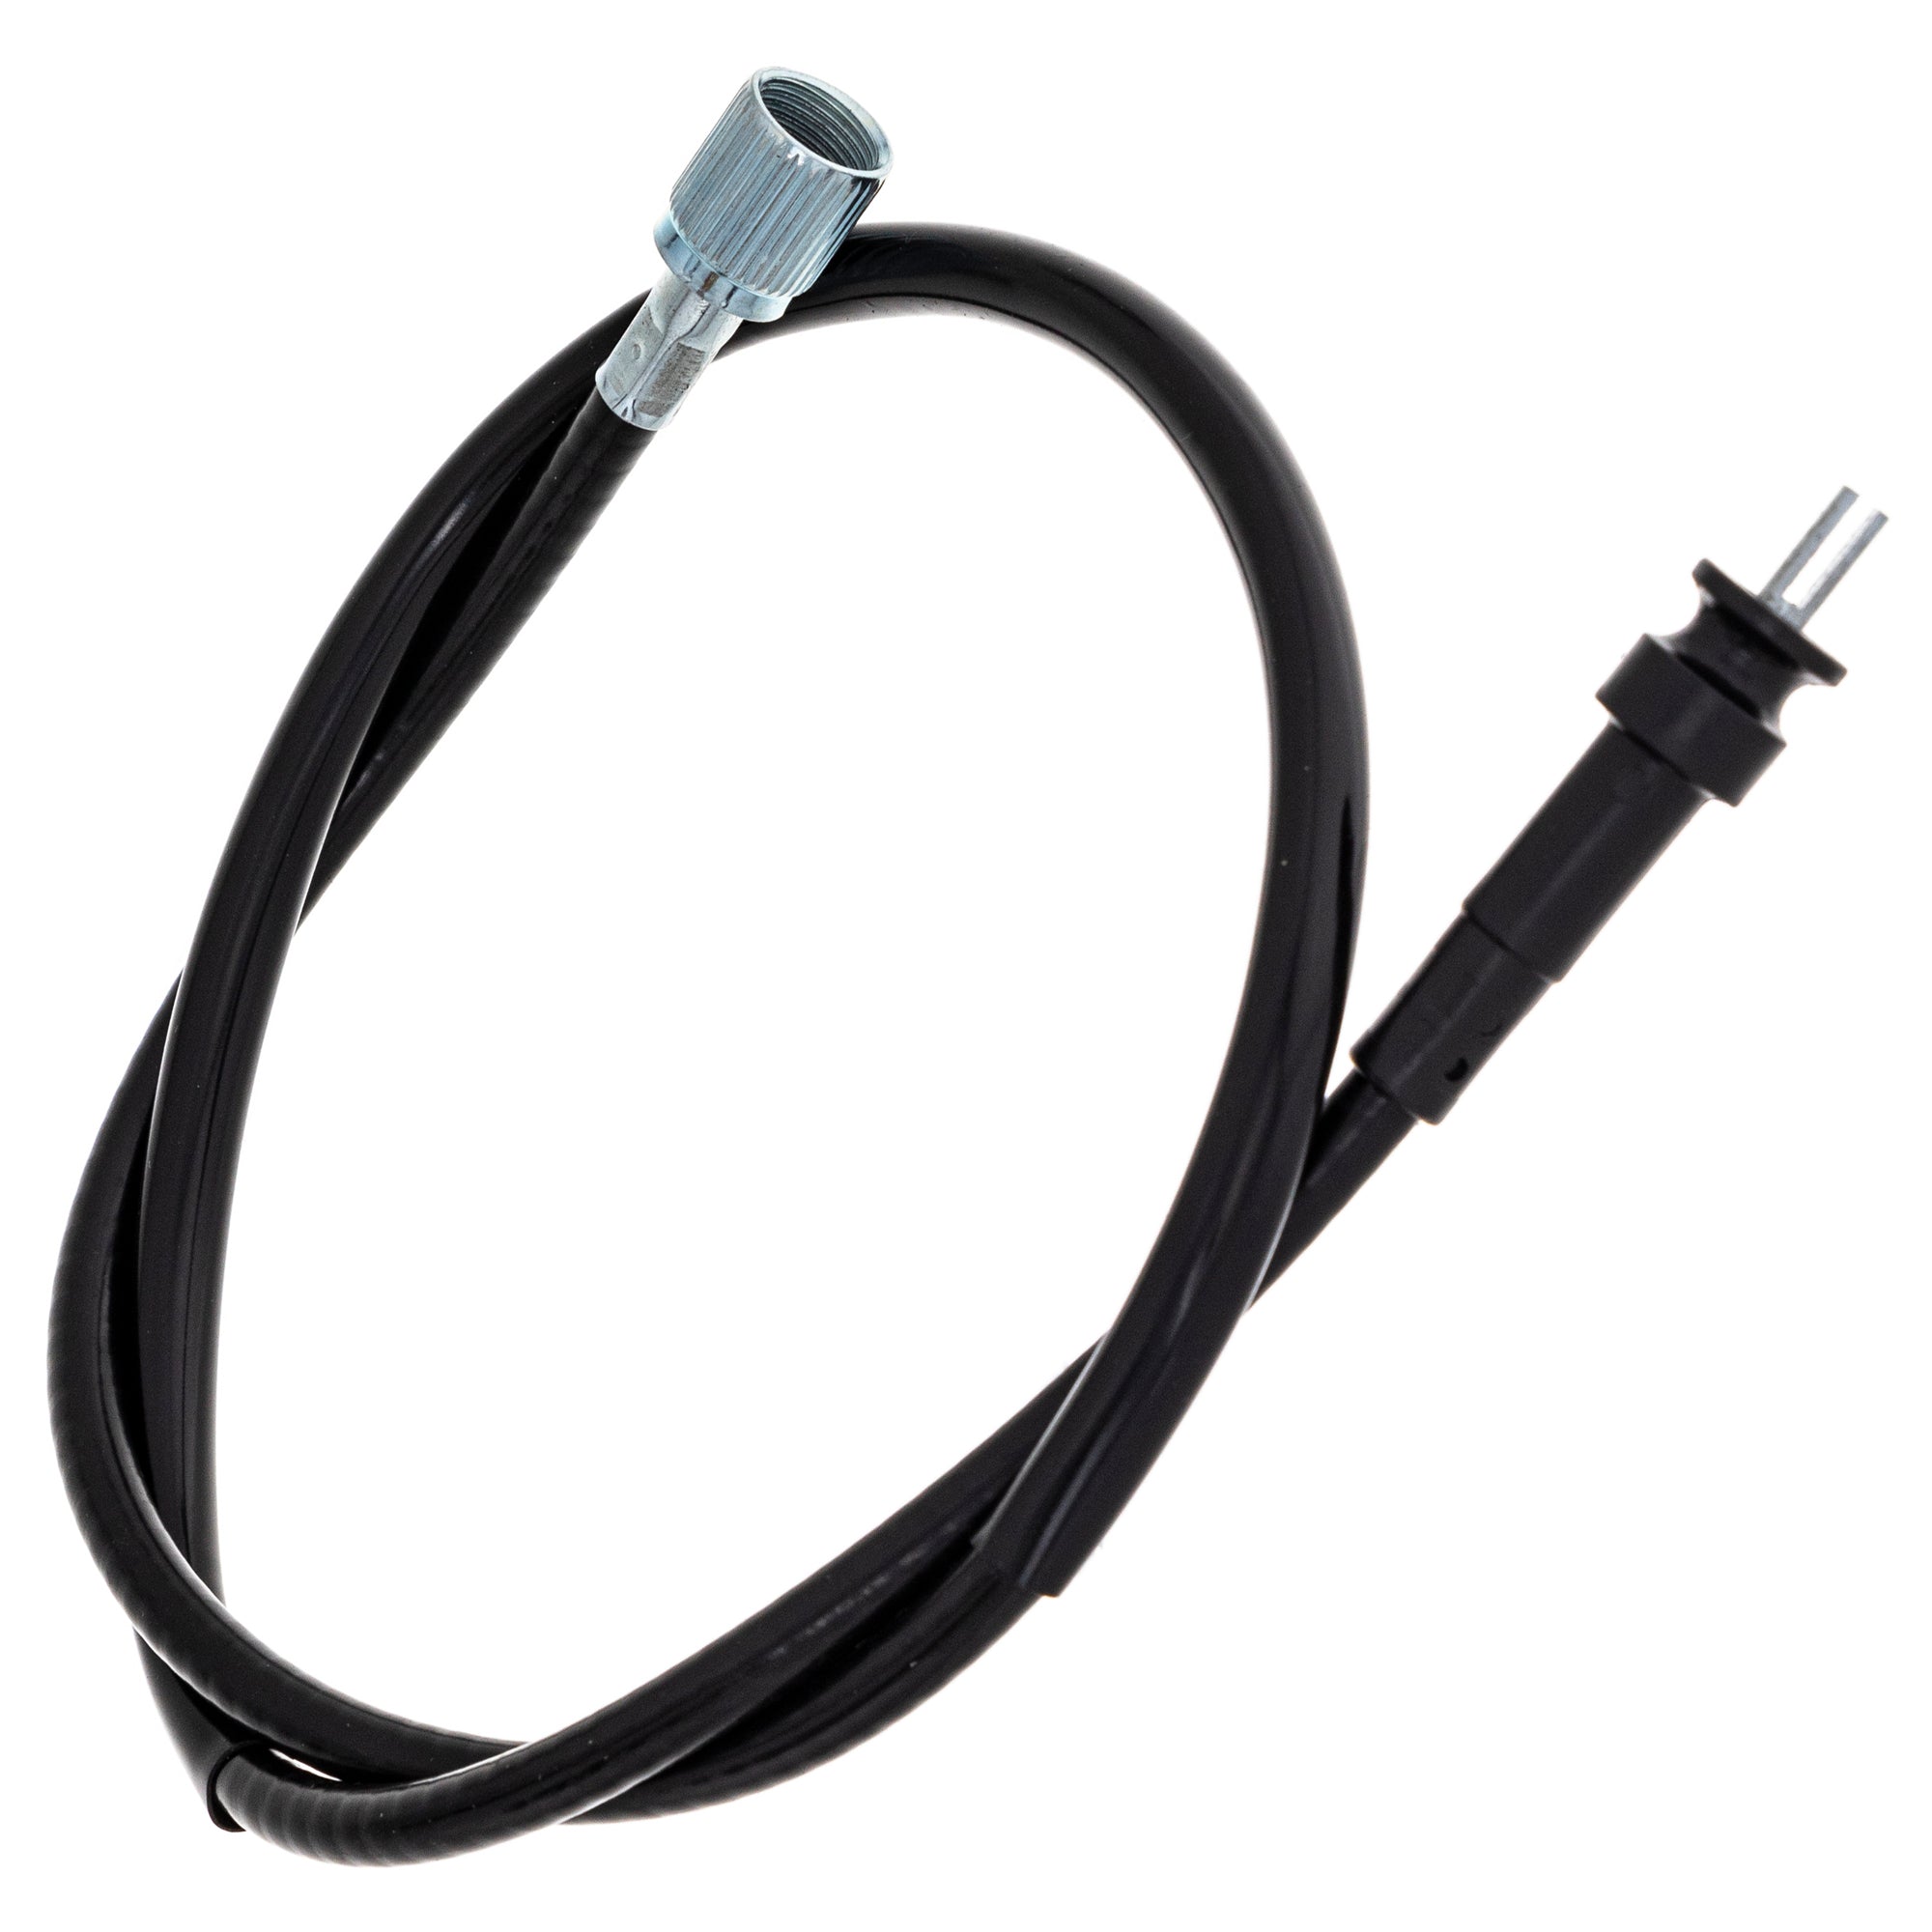 Tachometer Cable for Honda Hawk 400 Nighthawk 450 CM400C 37260-MC9-860